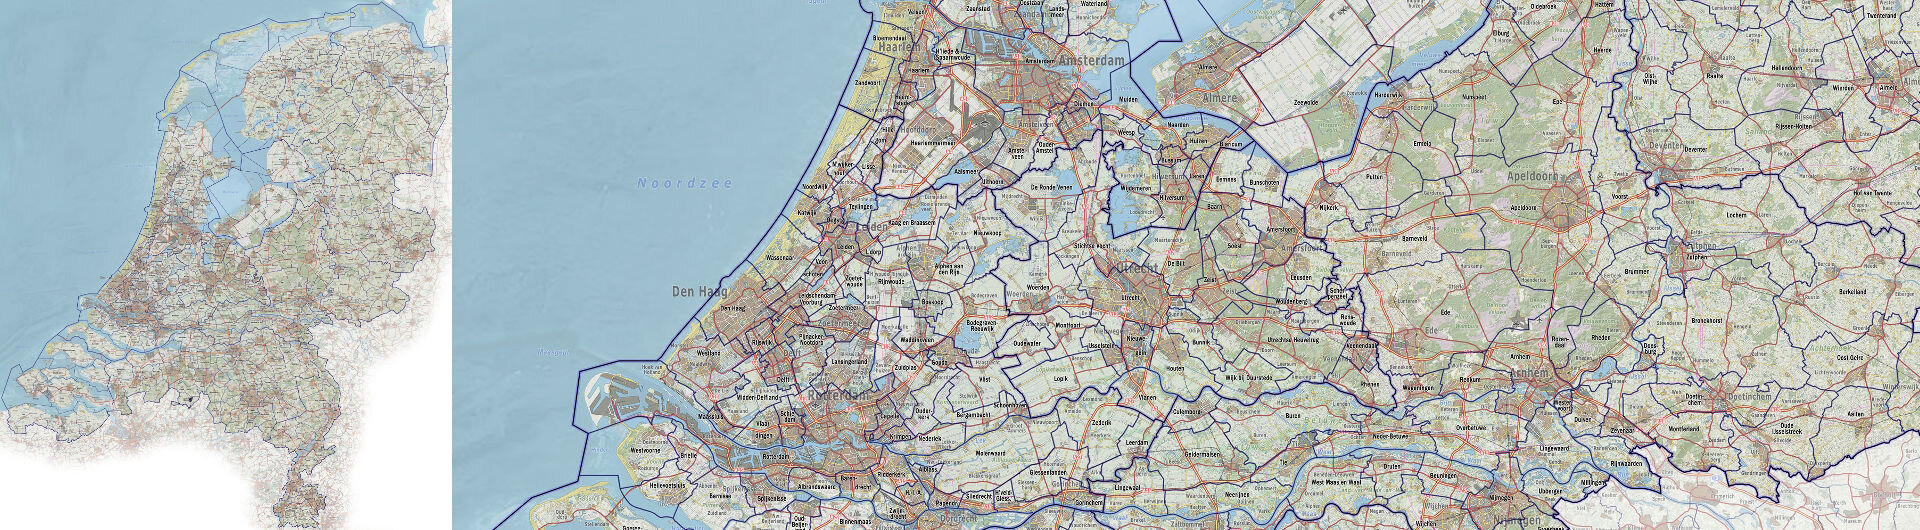 Nederland CC-BY-SA 3.0 Janwillemvanaalst via Wikicommons